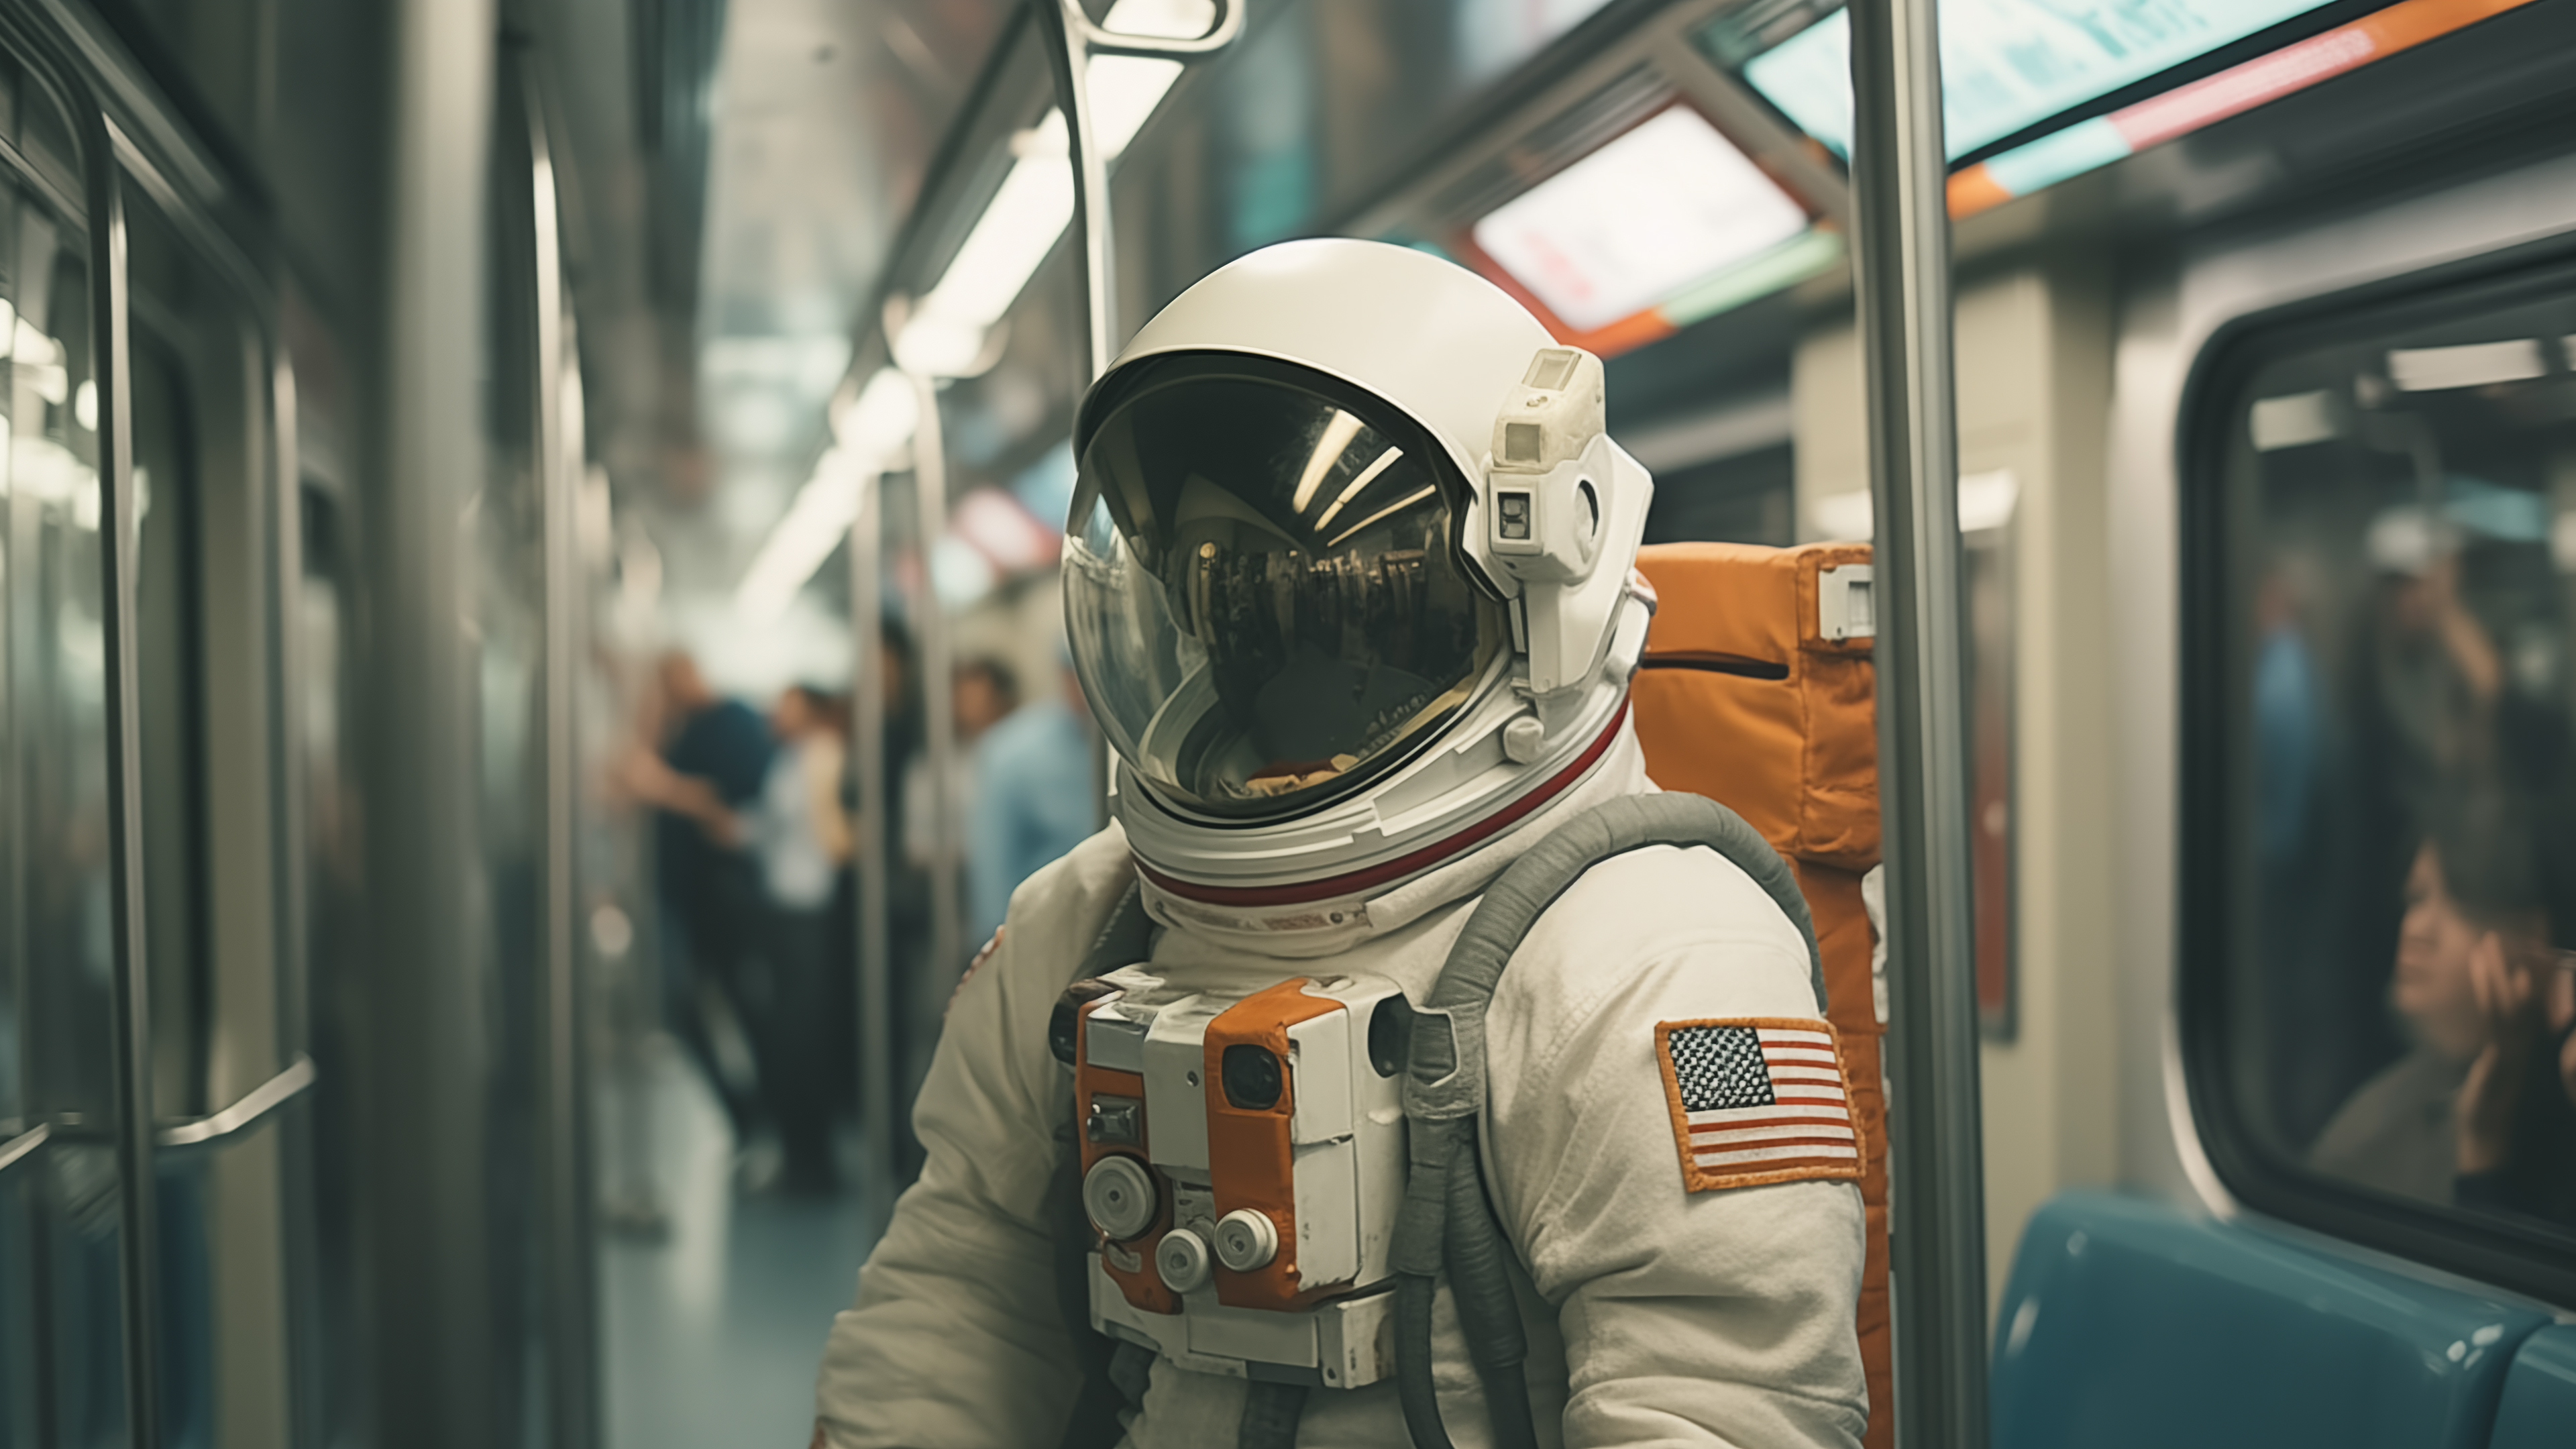 General 3840x2160 AI art astronaut helmet subway blurred blurry background digital art spacesuit American flag